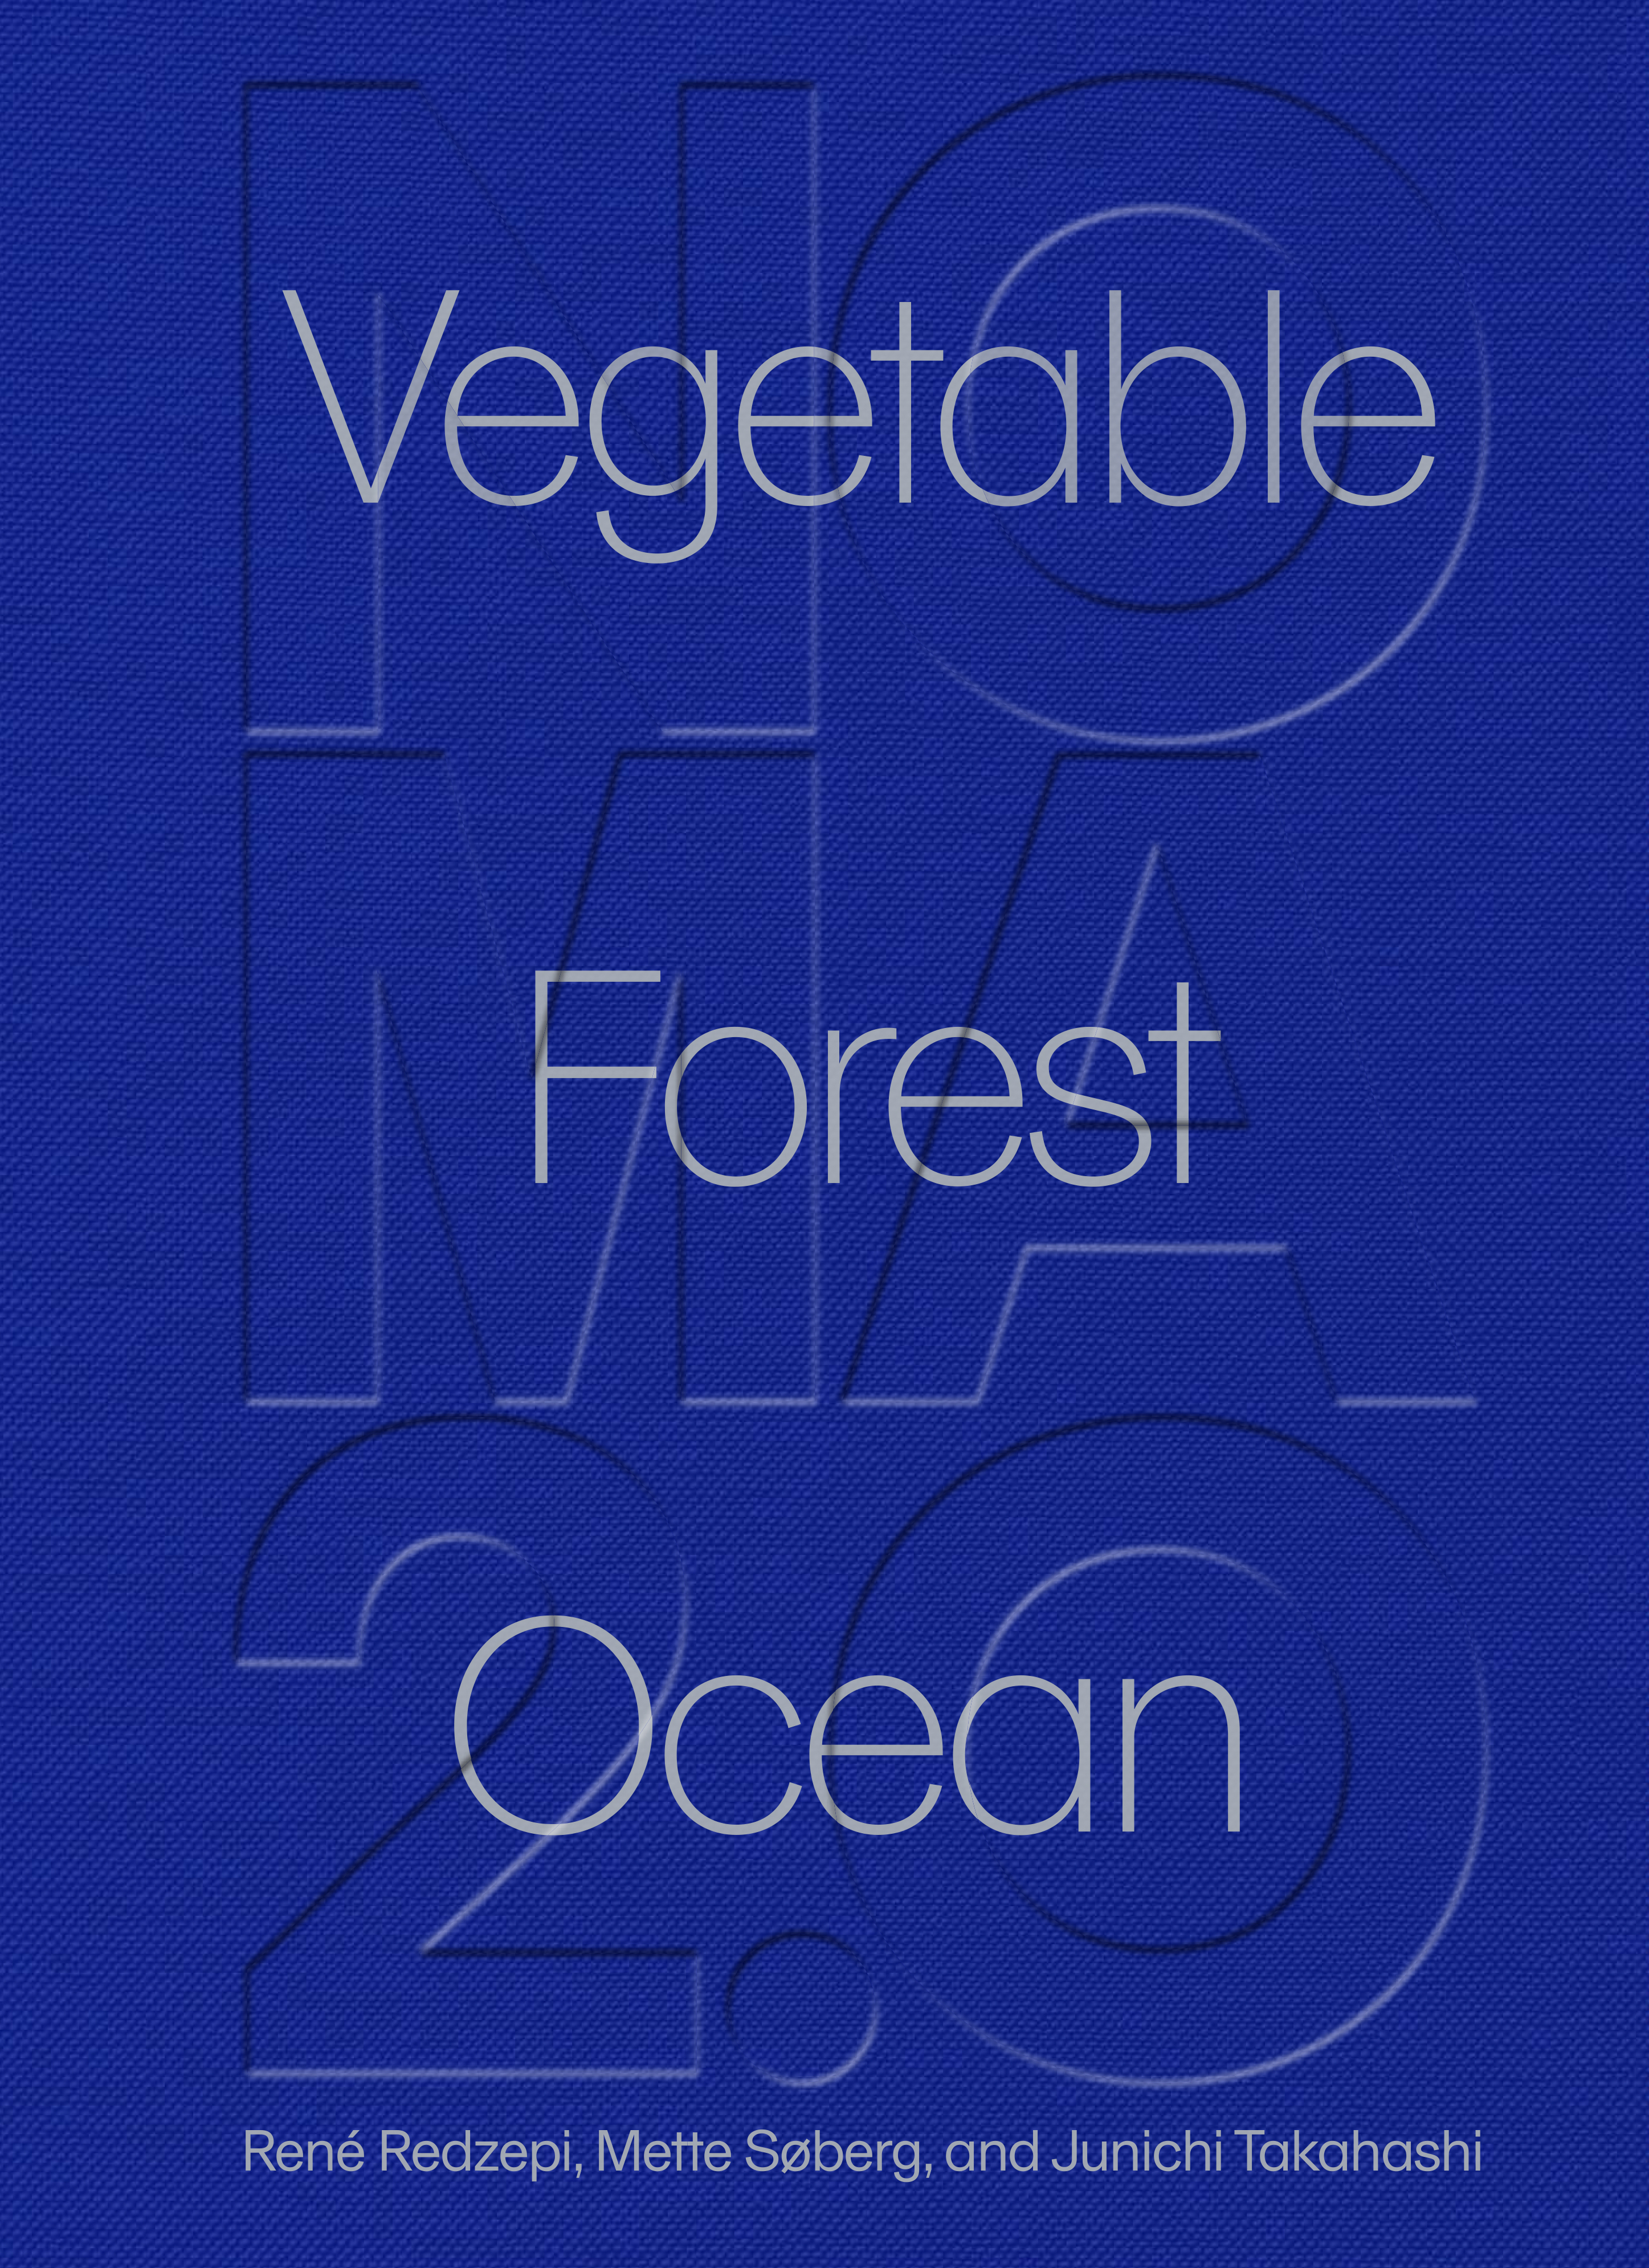 Noma 2.0 : Vegetable, Forest, Ocean | 